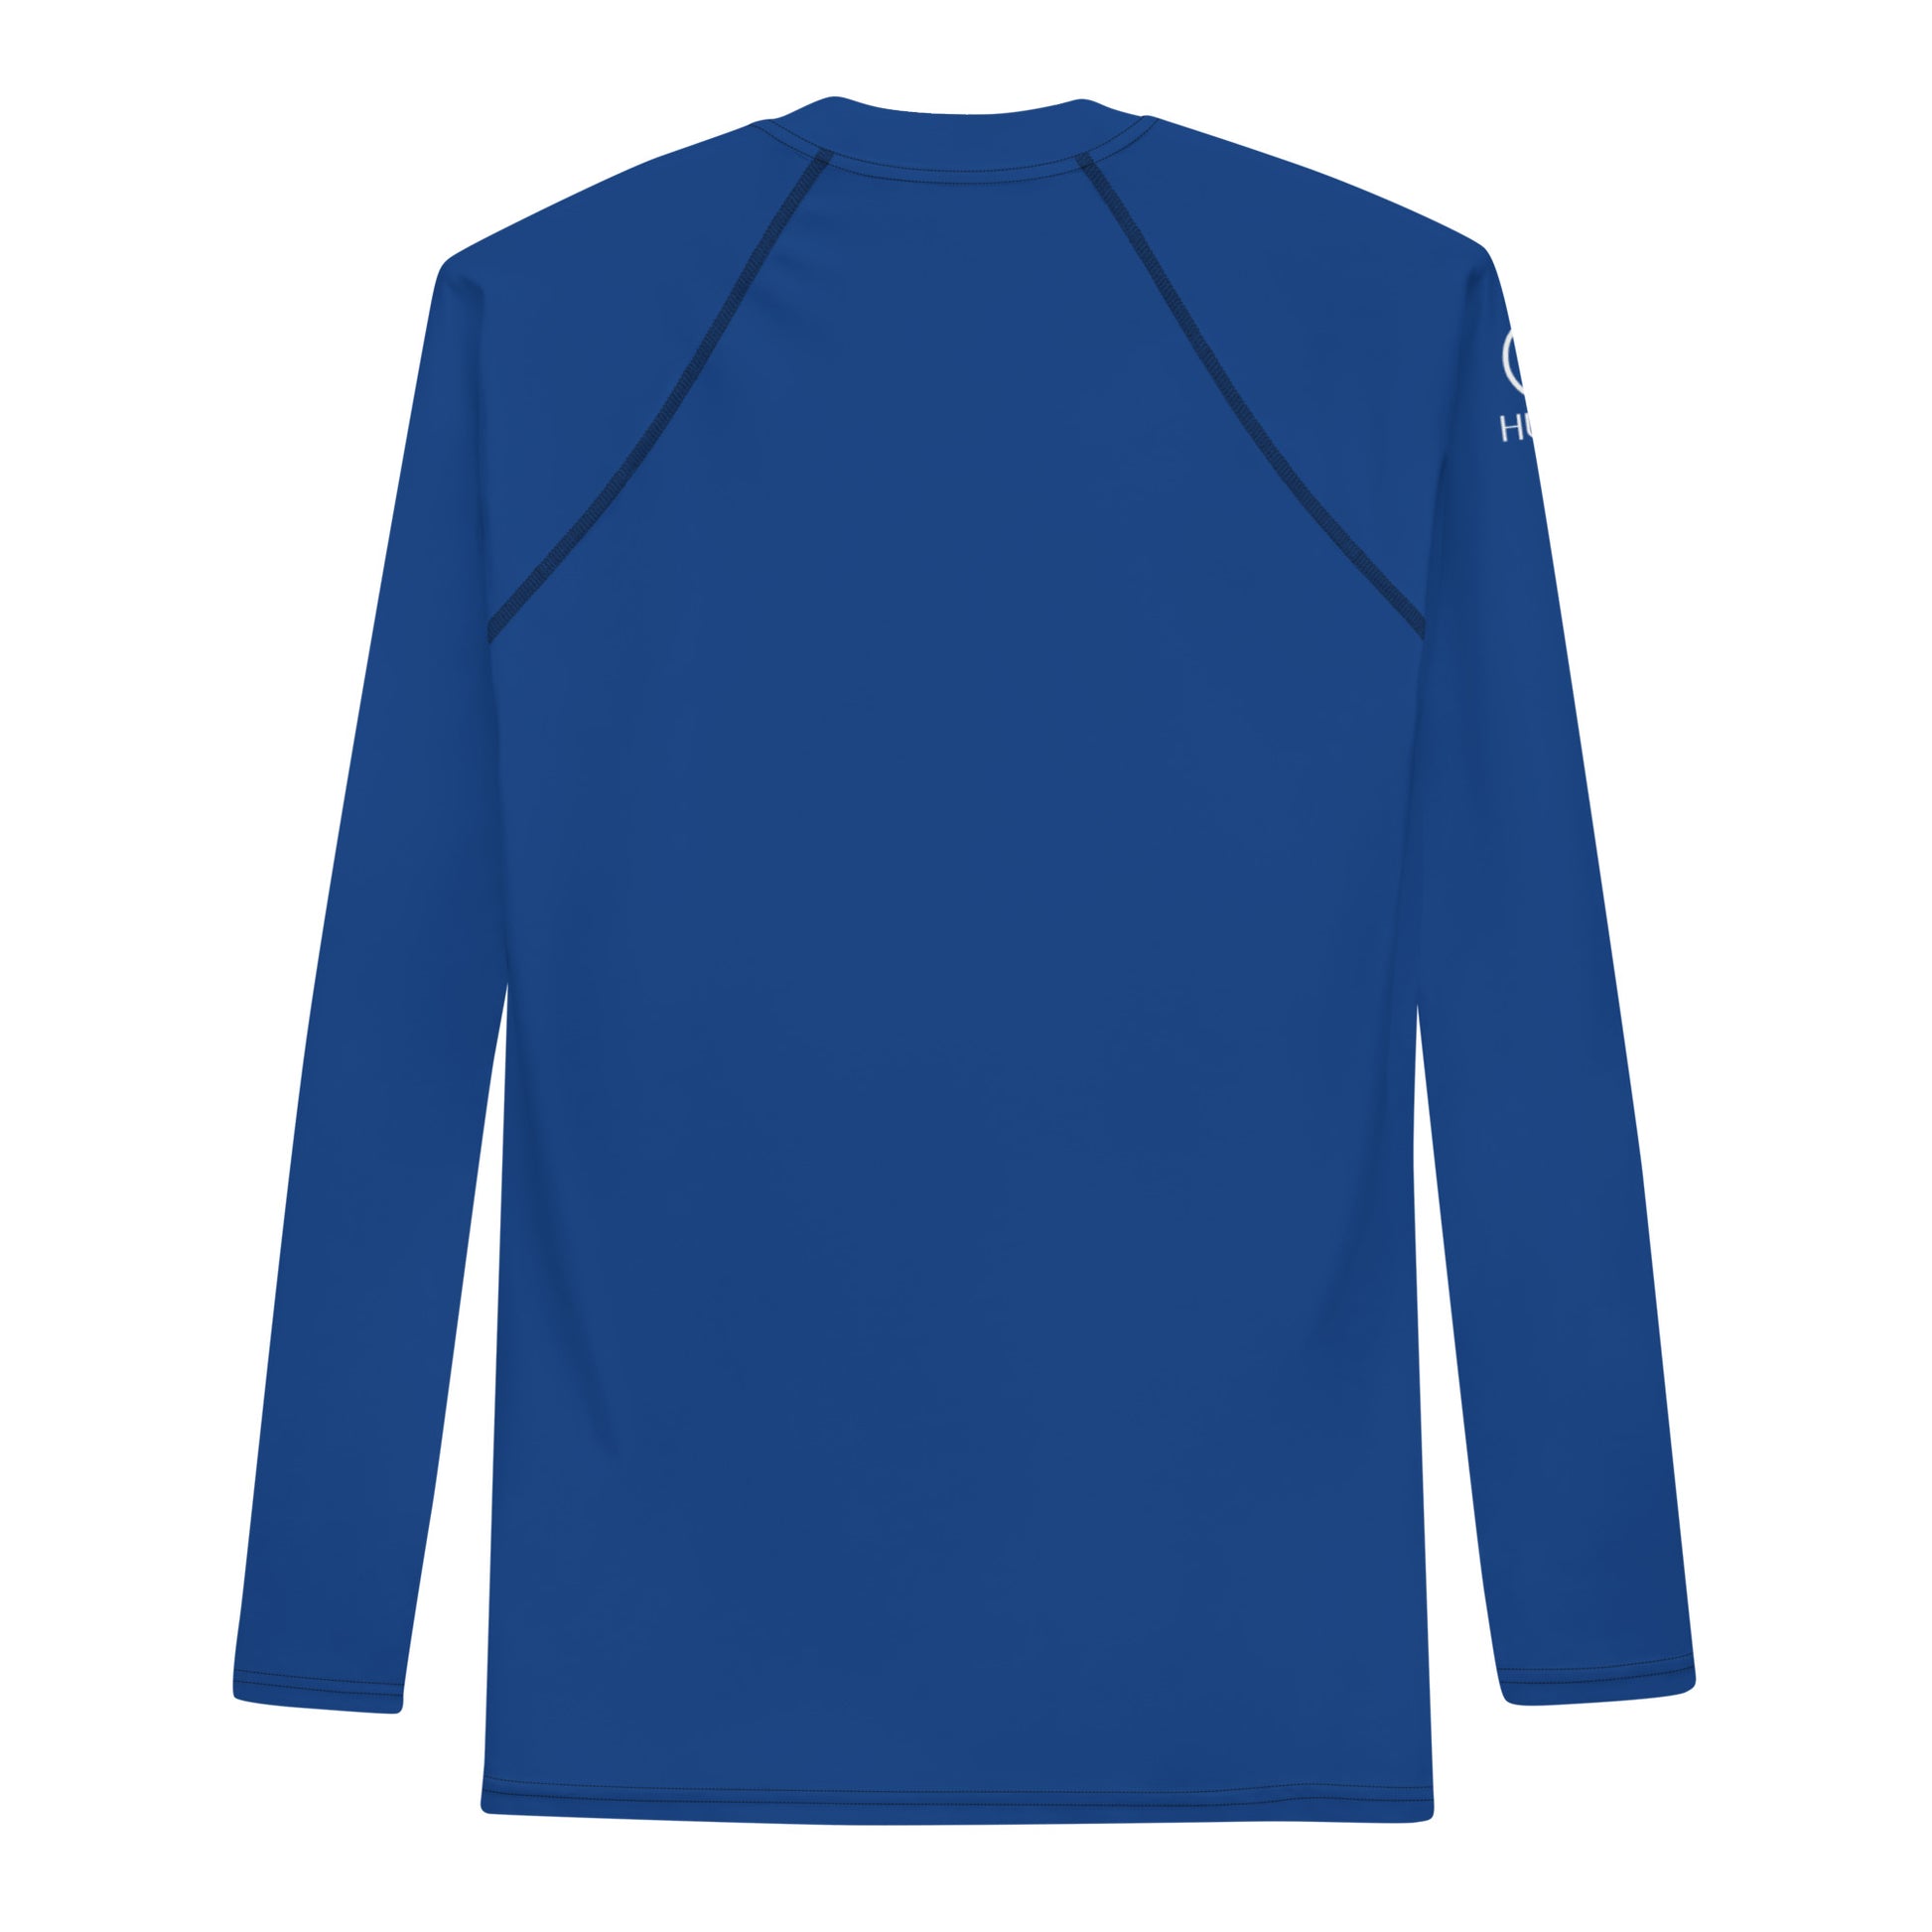 Humble Sportswear, men's color match long sleeve compression active wear cerulean blue